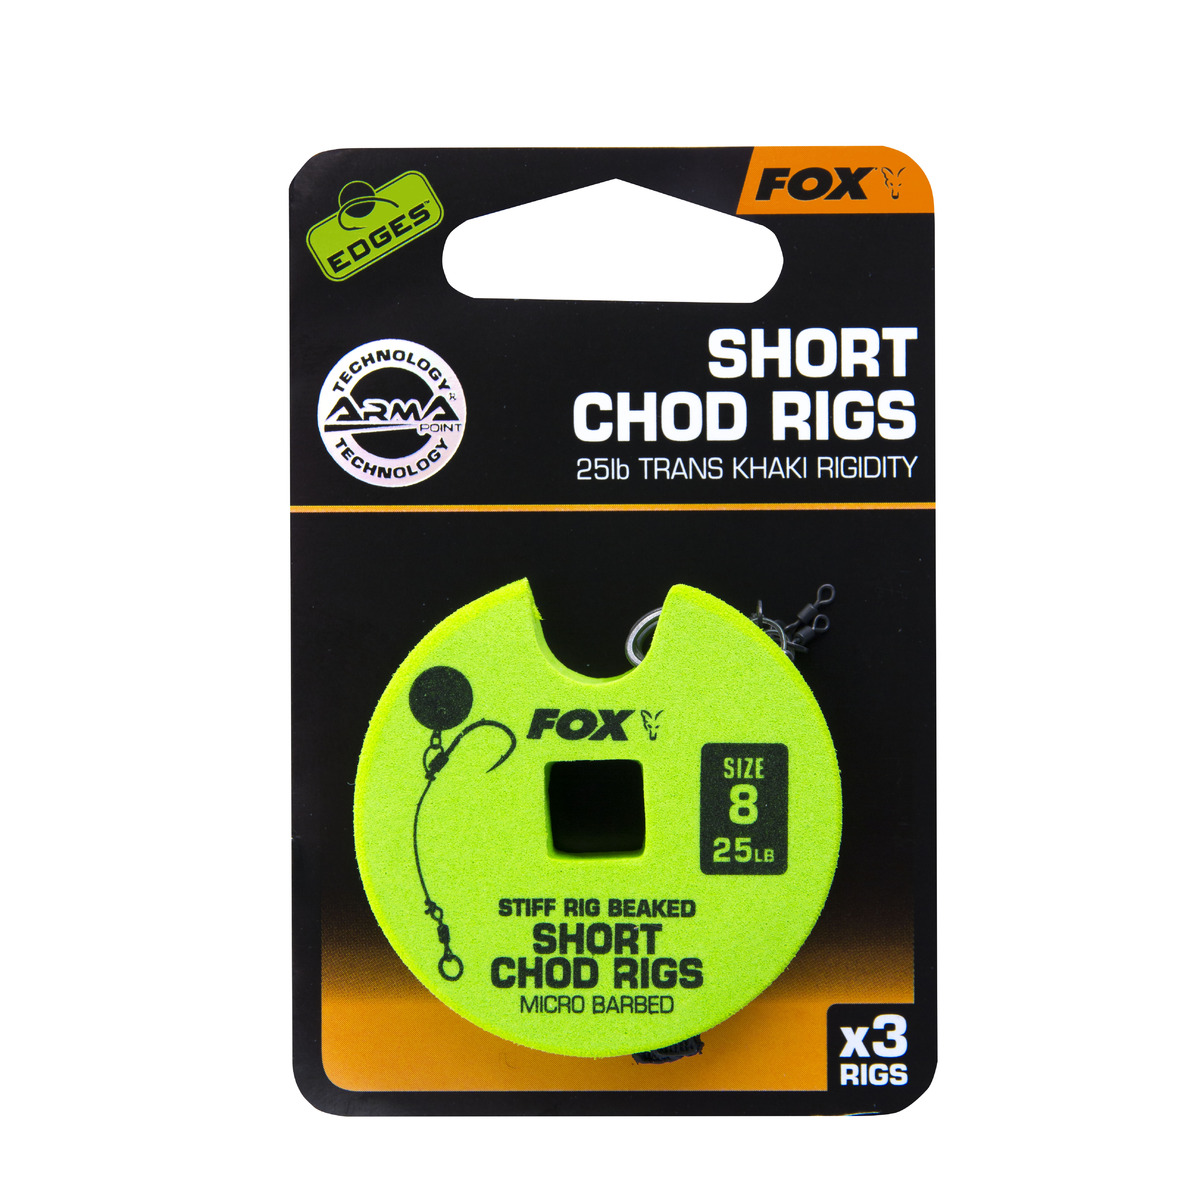 Fox Edges Chod Rigs - Short - 25lb, size 8 Short Chod Rig Barbed